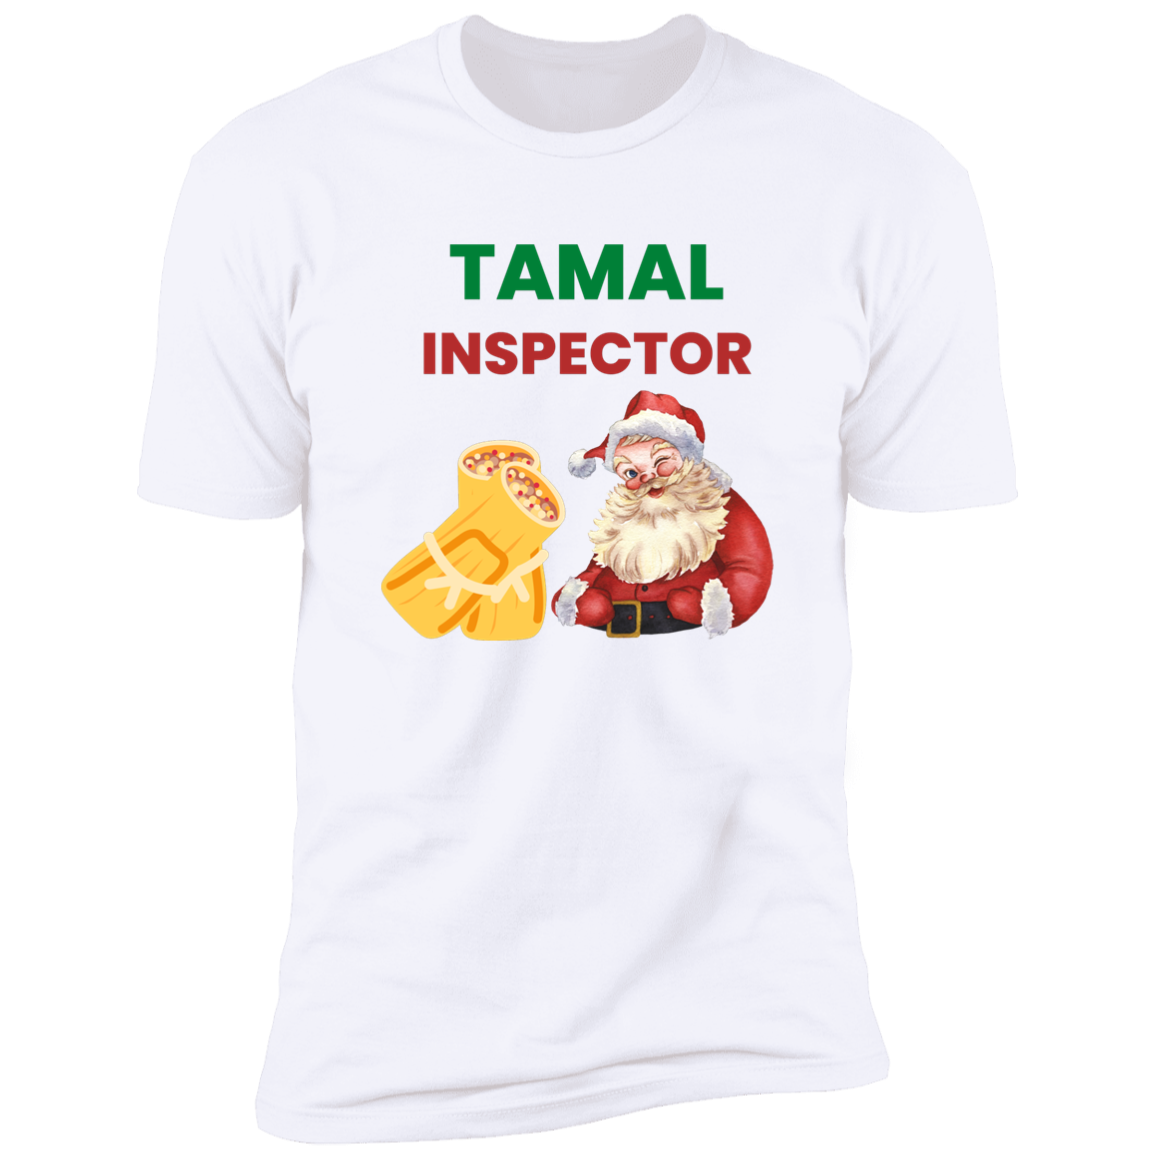 TAMAL INSPECTOR Premium Short Sleeve Tee (Closeout)